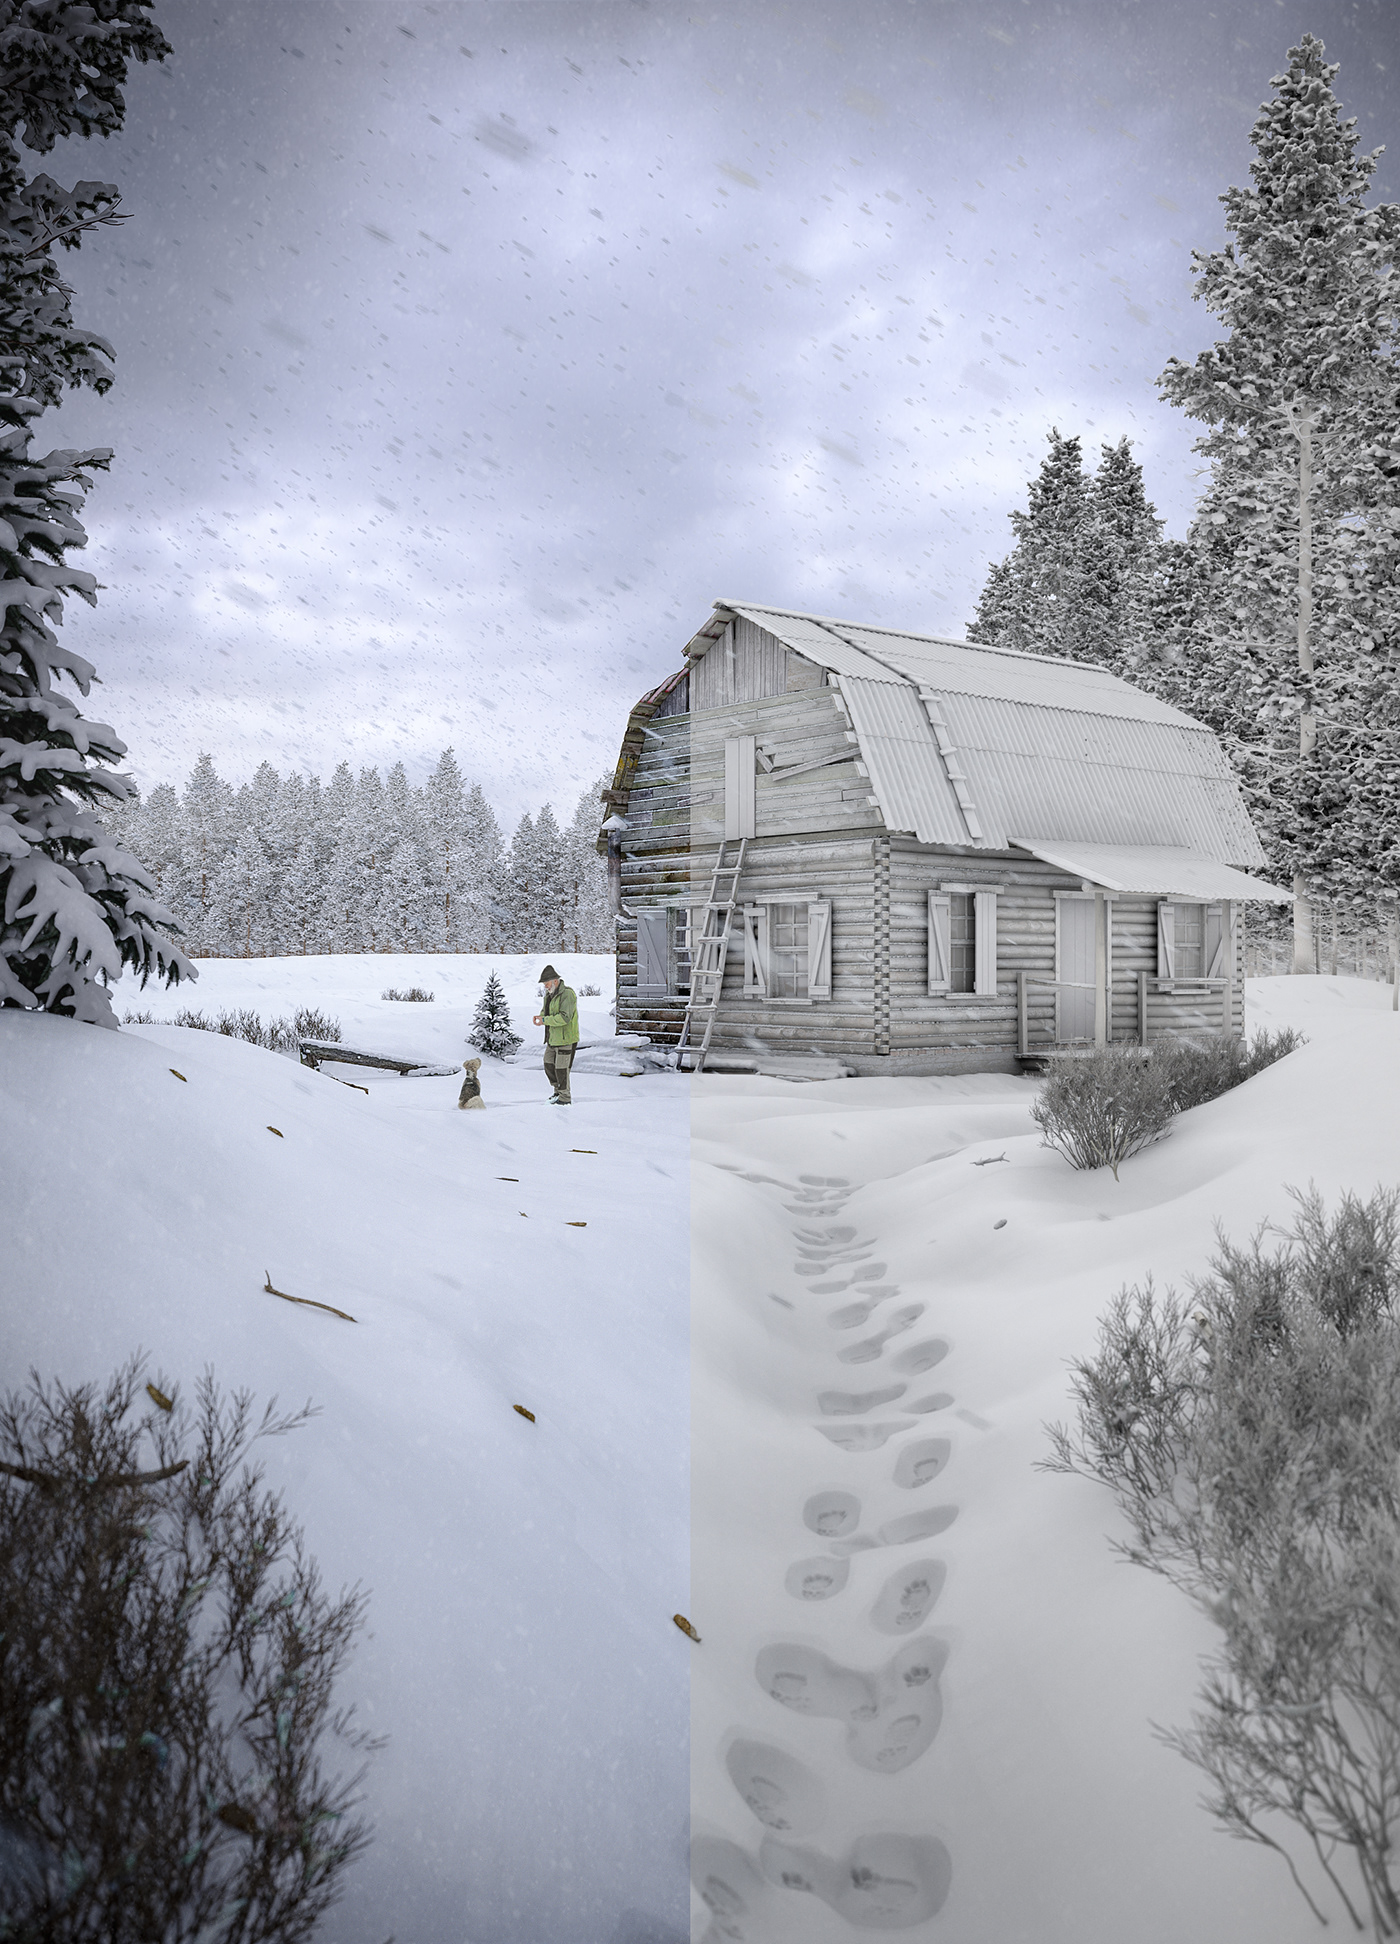 coronarenderer 3dsmax photoshop forest snow Render 3drender visualization architecture CGI whatarerender